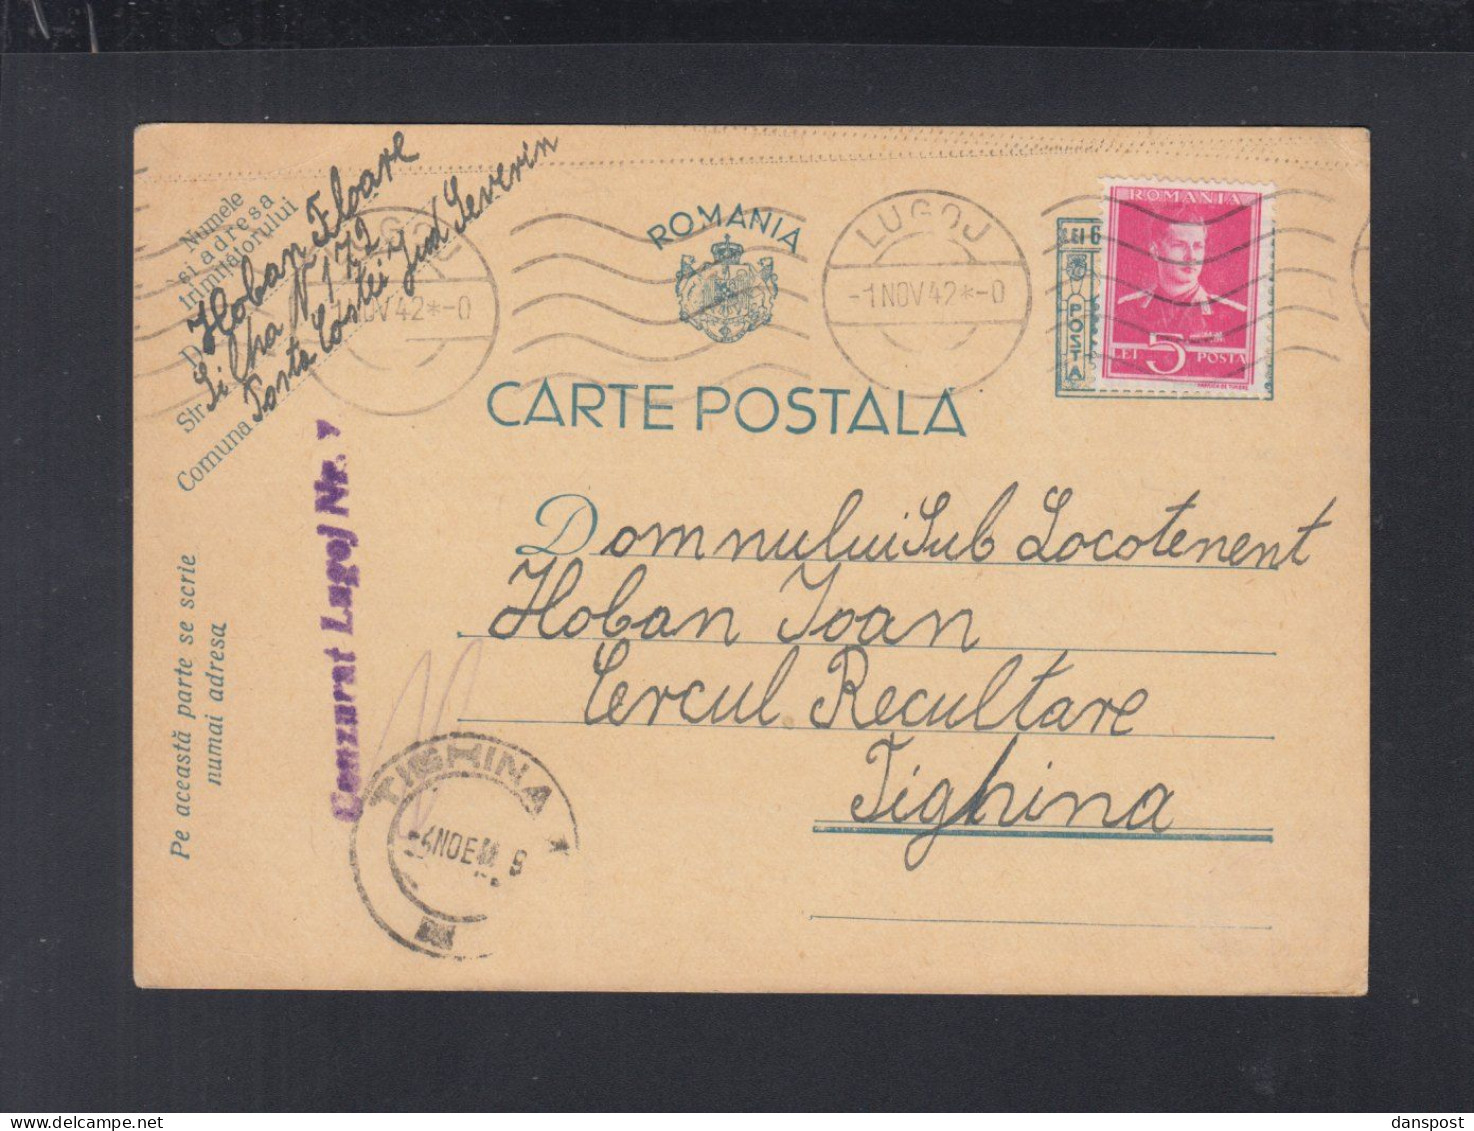 Rumänien Romania PK 1942 Lugoj Nach Tighina Zensur - 2. Weltkrieg (Briefe)